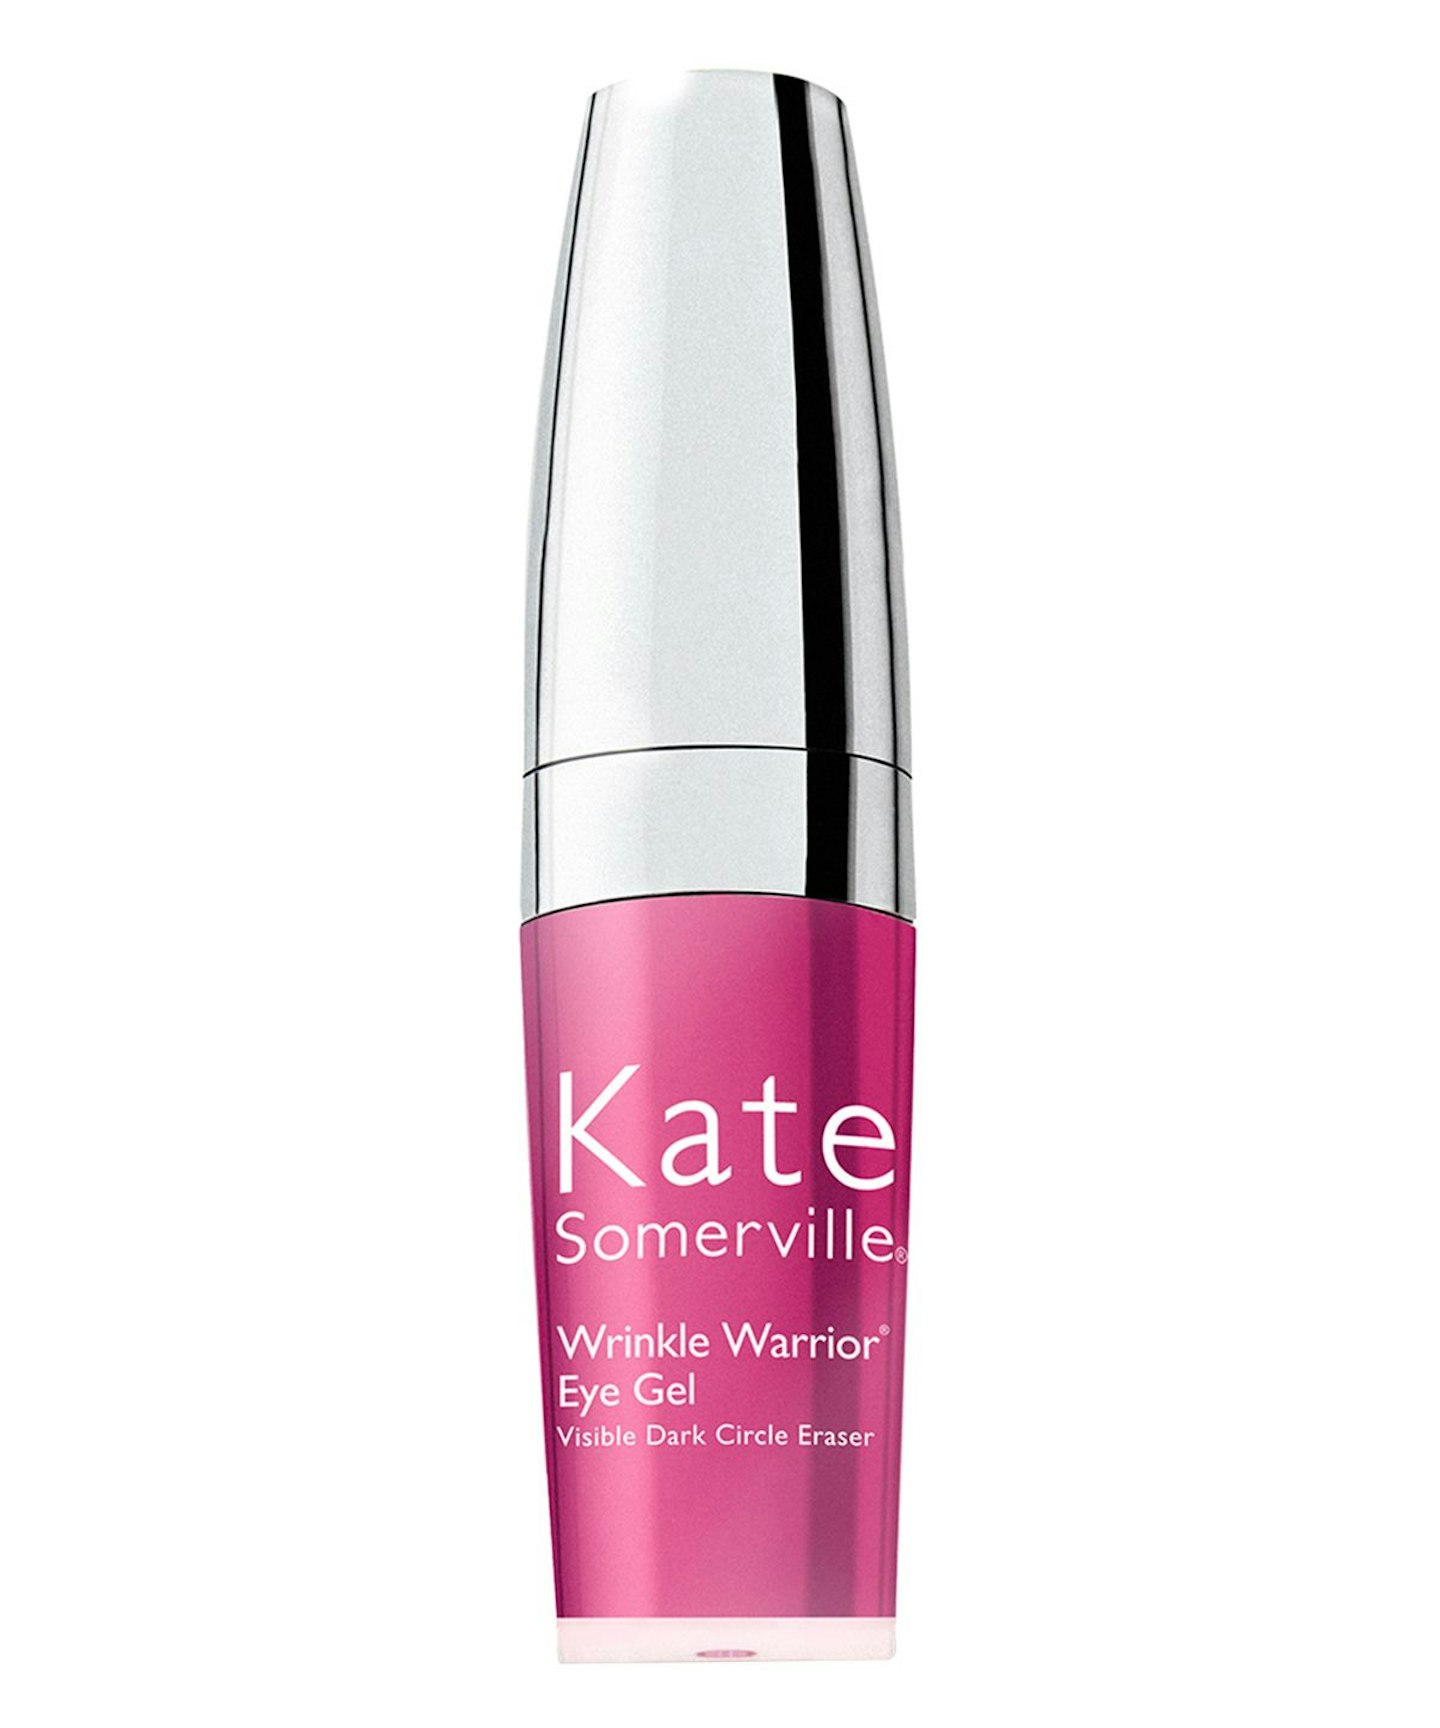 Kate Somerville Wrinkle Warrior Eye Gel, £51